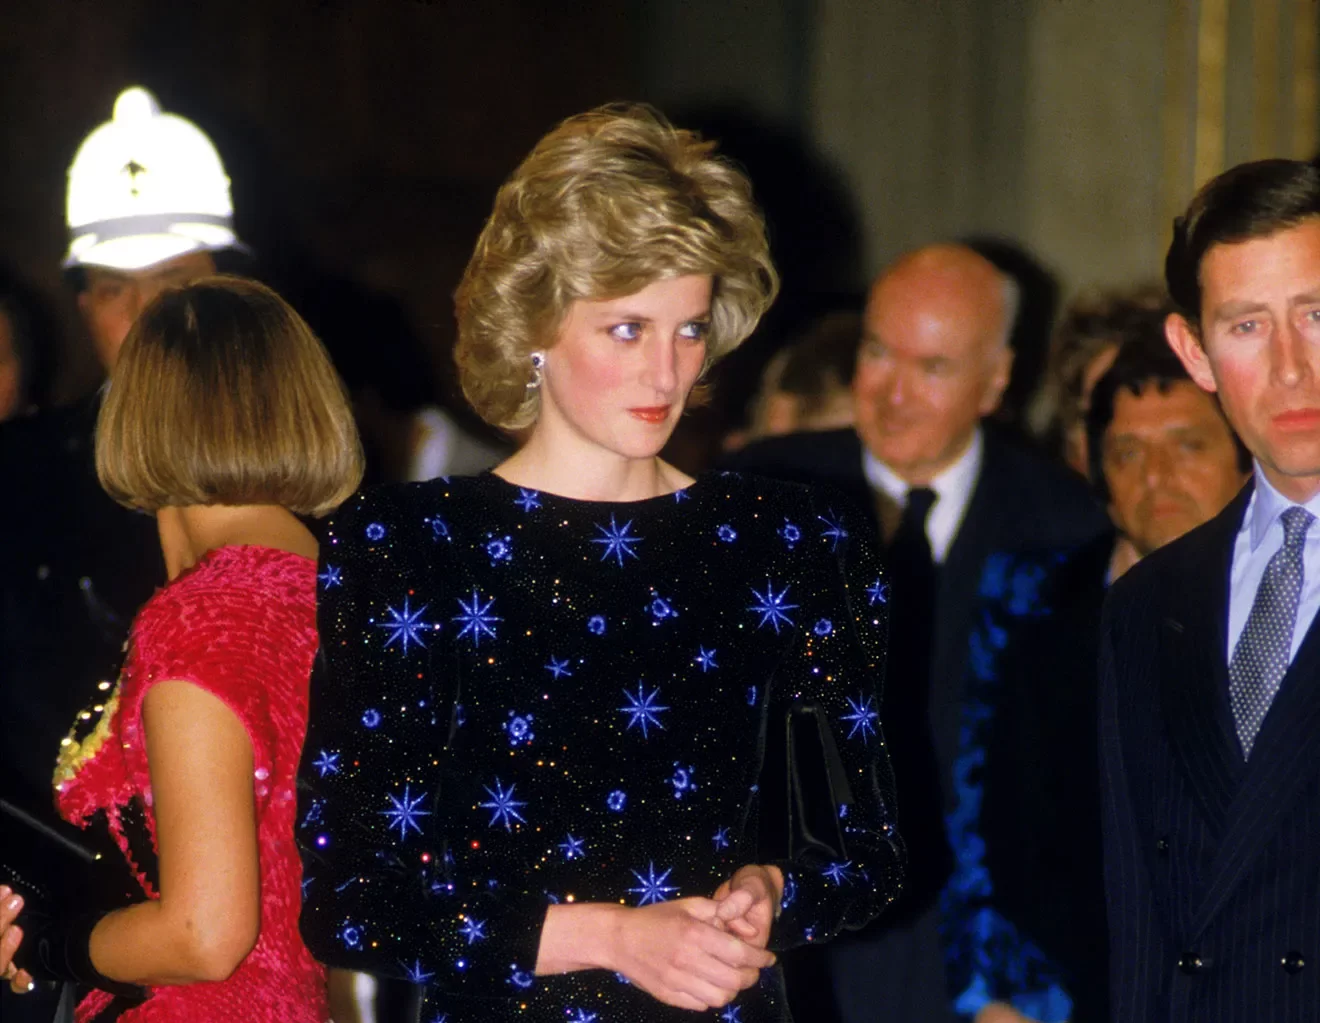 Princess Diana dress sold at auction